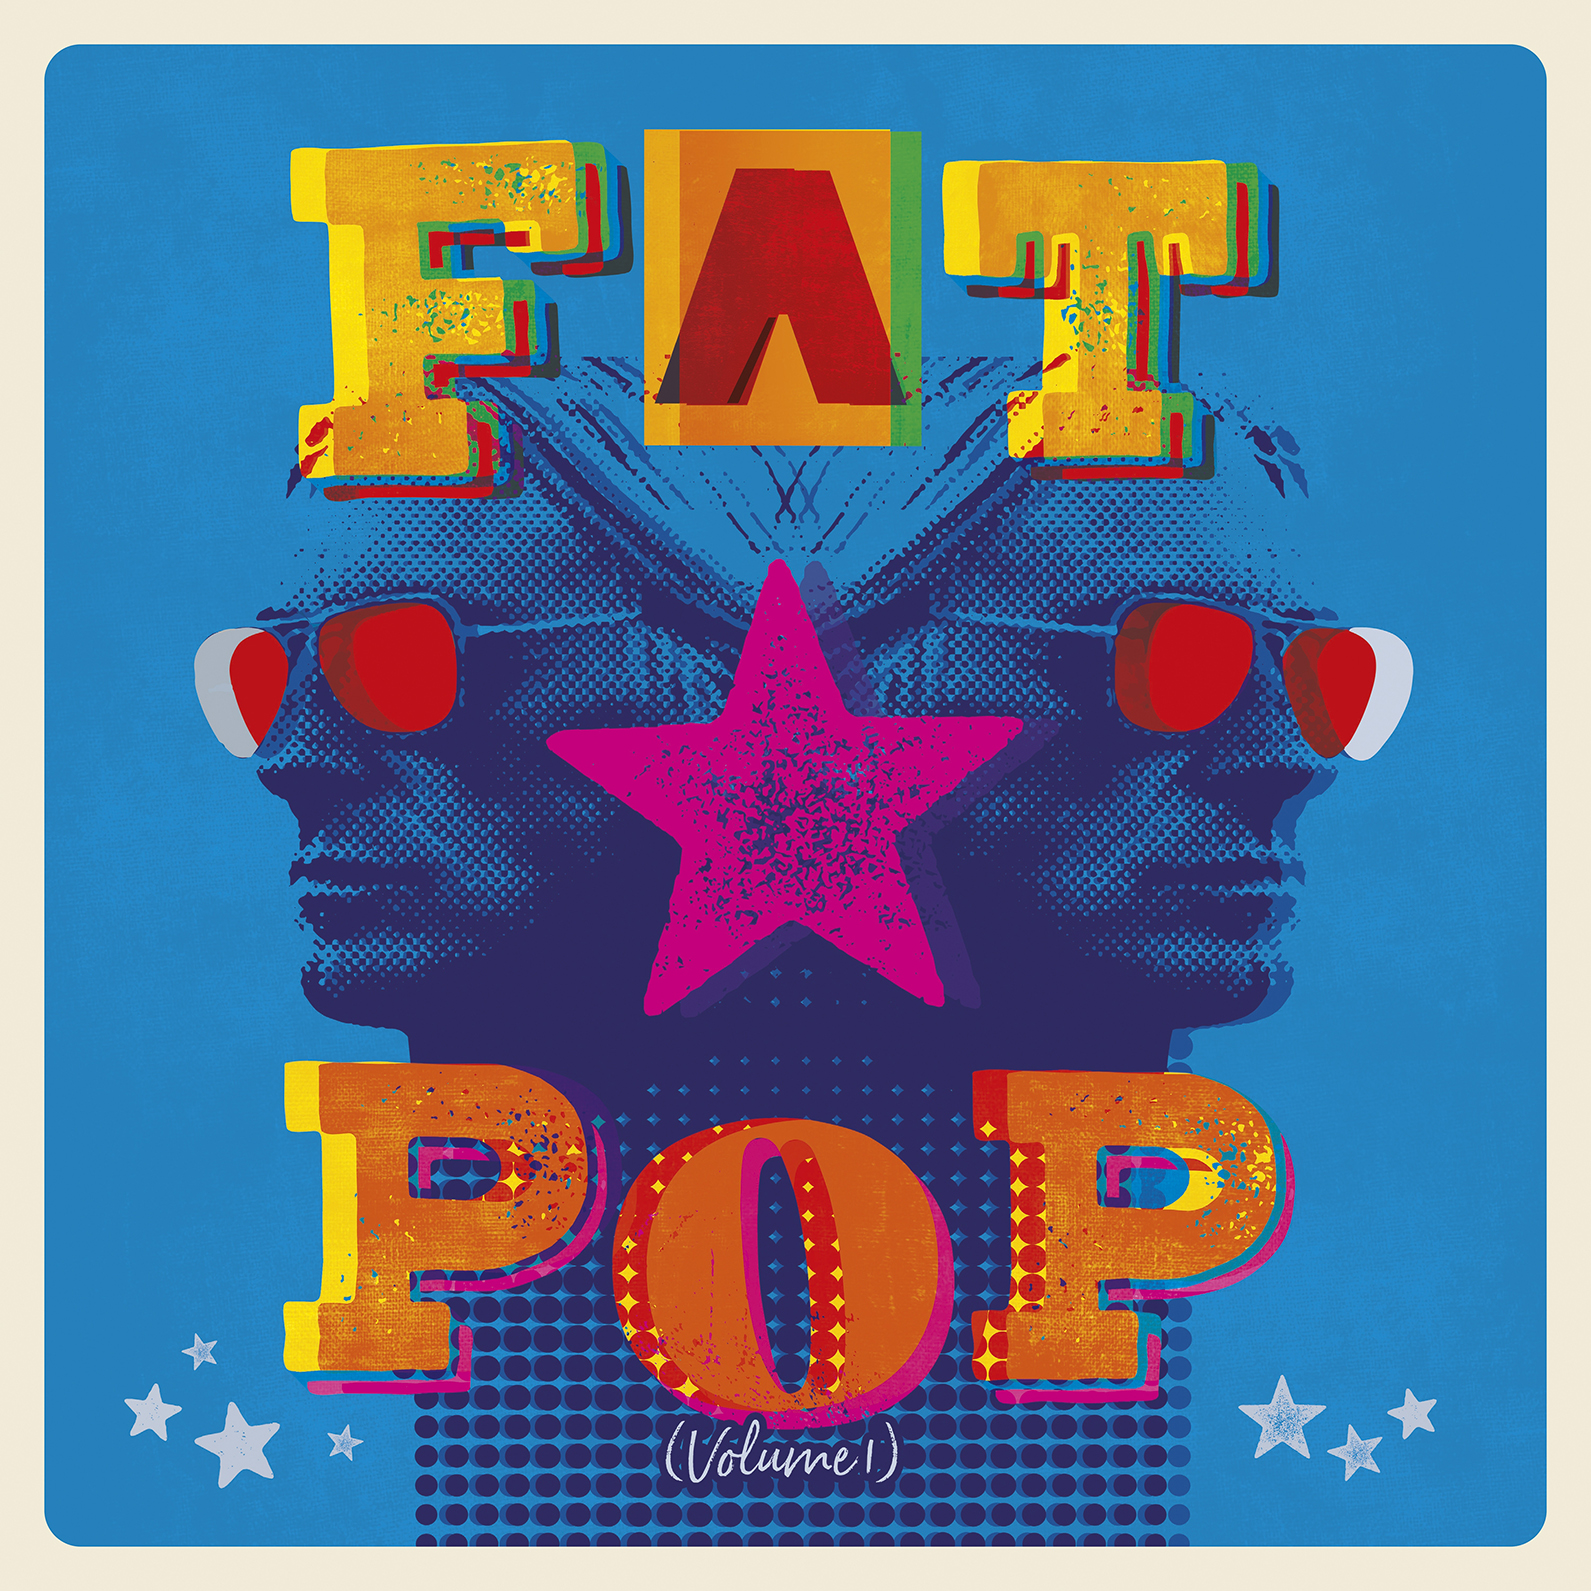 ALBUM REVIEW: Paul Weller - Fat Pop Vol 1 